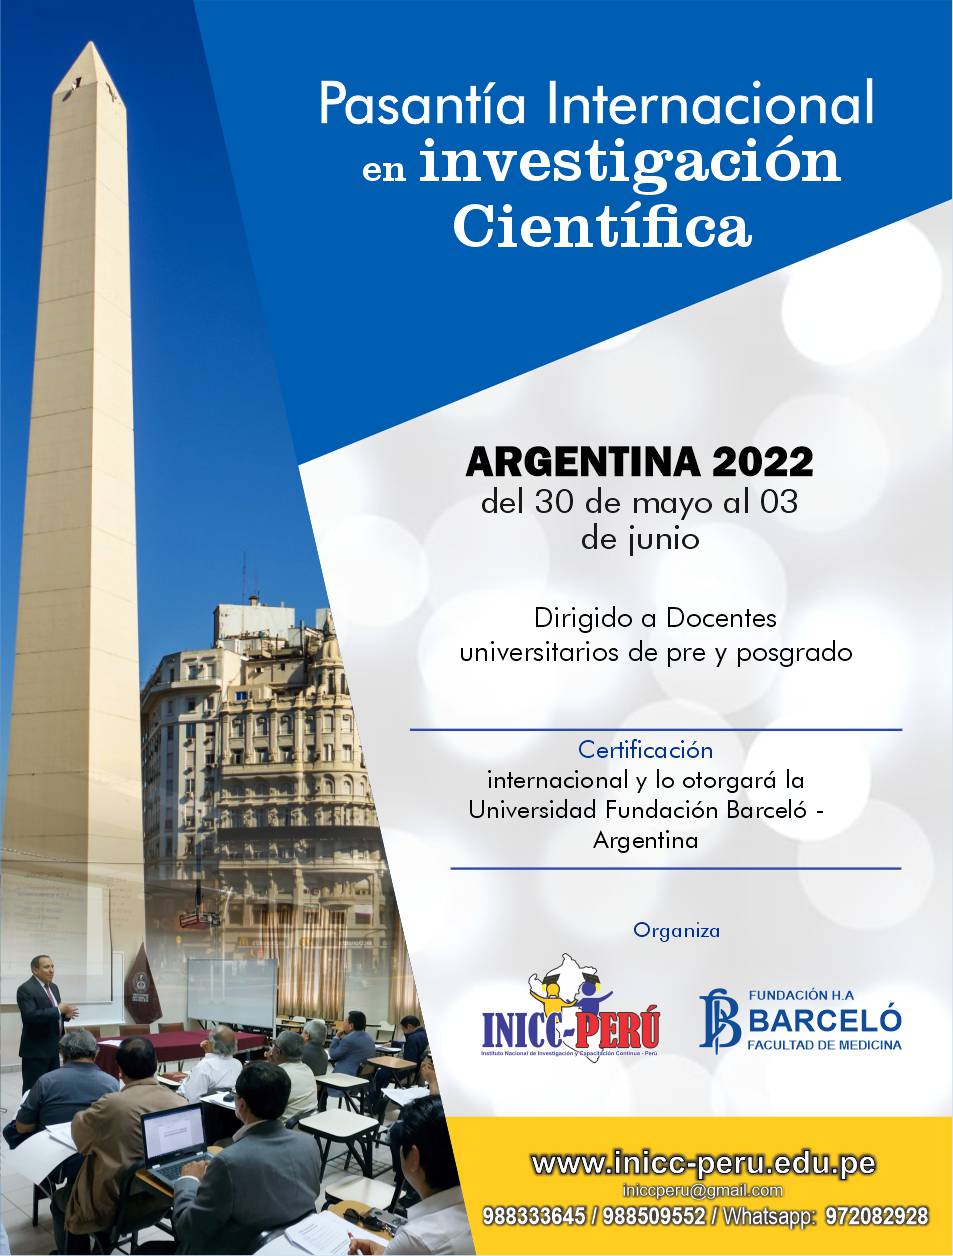 Pasantía Internacional en investigación Científica ARGENTINA 2022